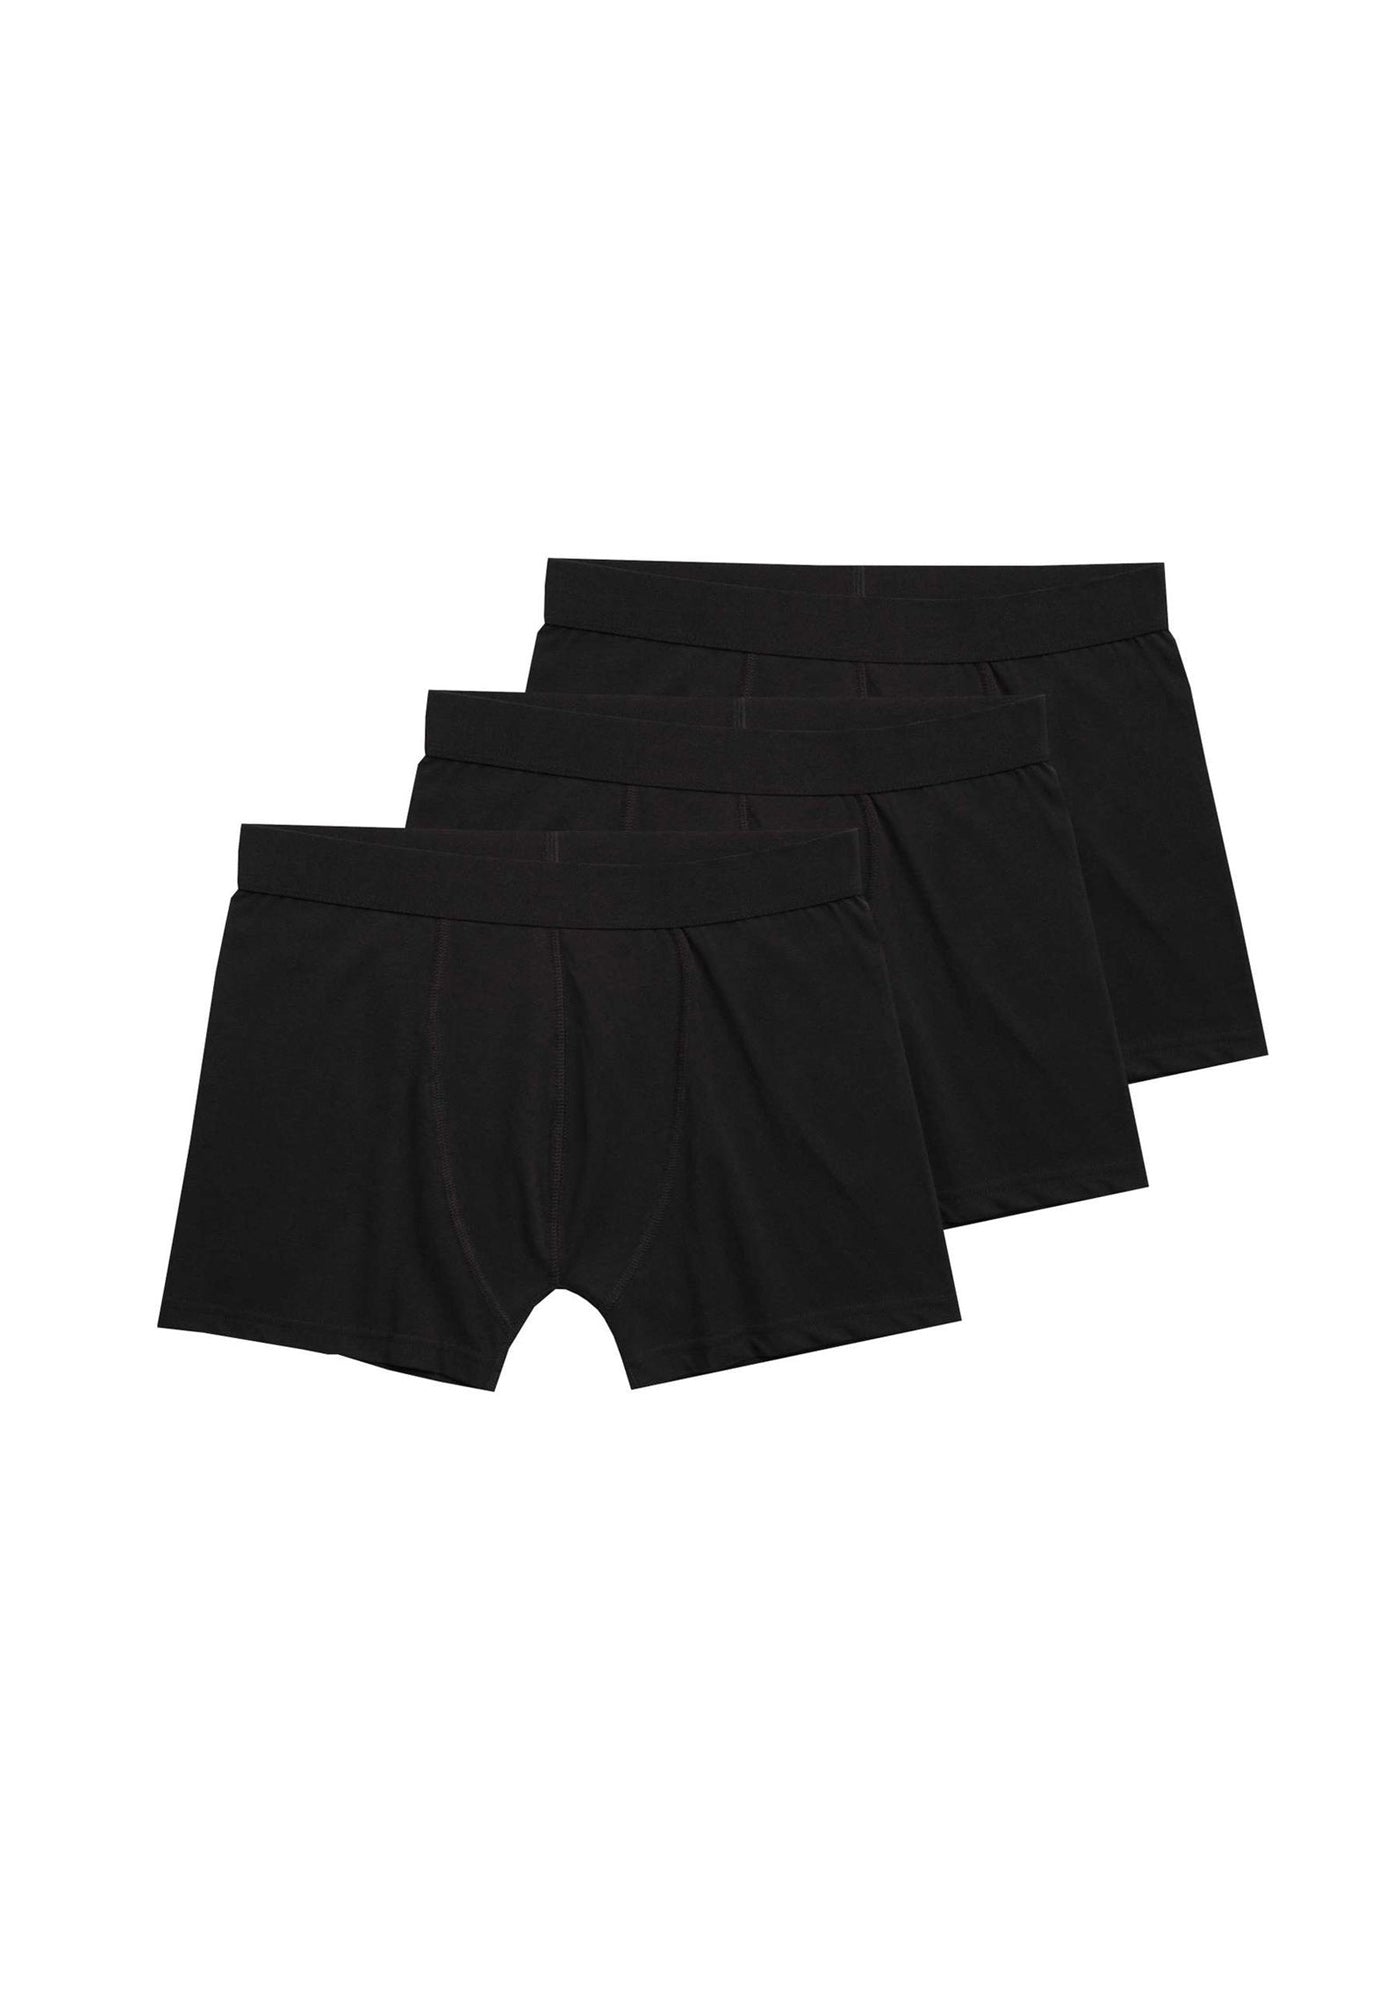 Black underpants 3-pack TT15 made of organic cotton from Thokkthokk